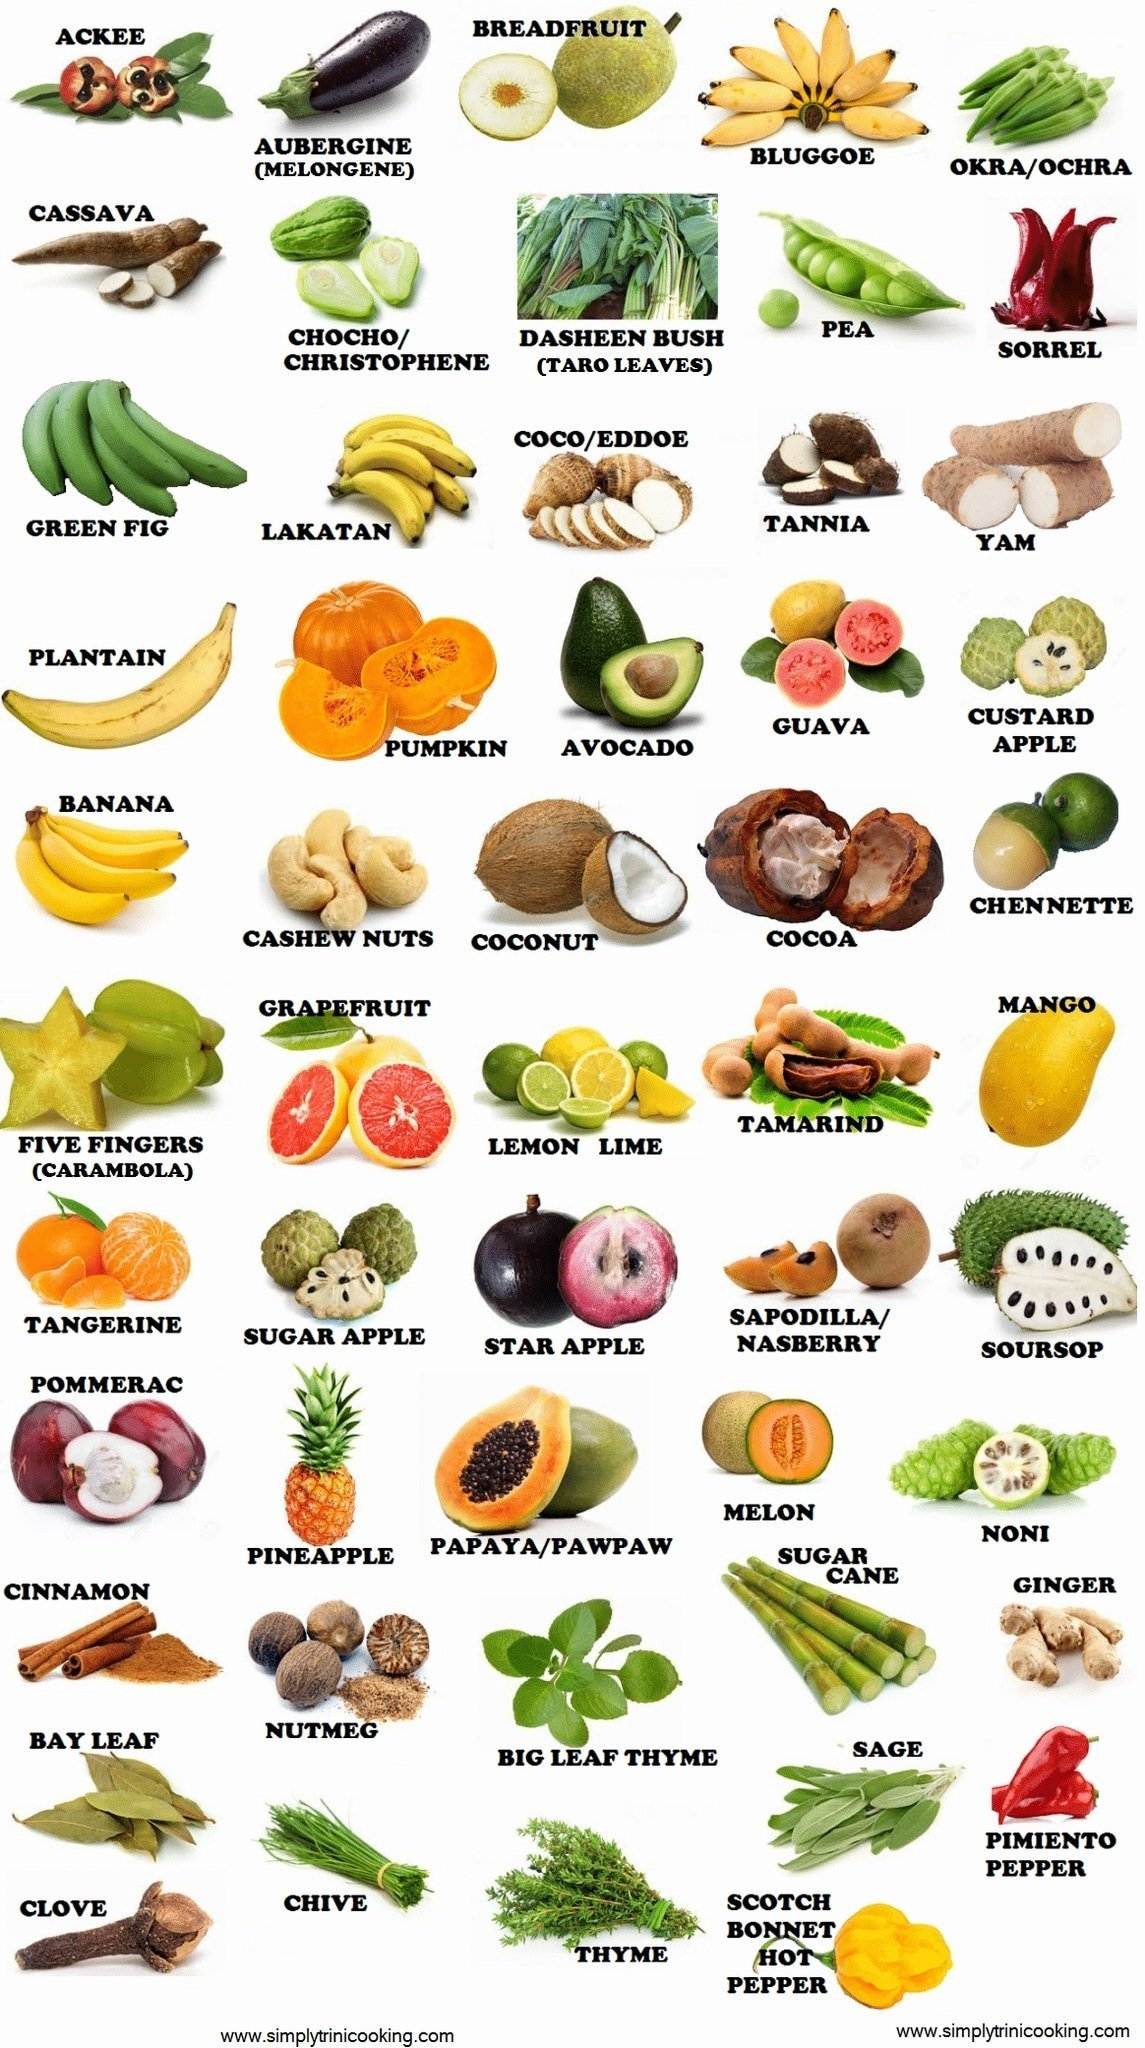 Caribbean Fruits and Vegetables, Trinidad food